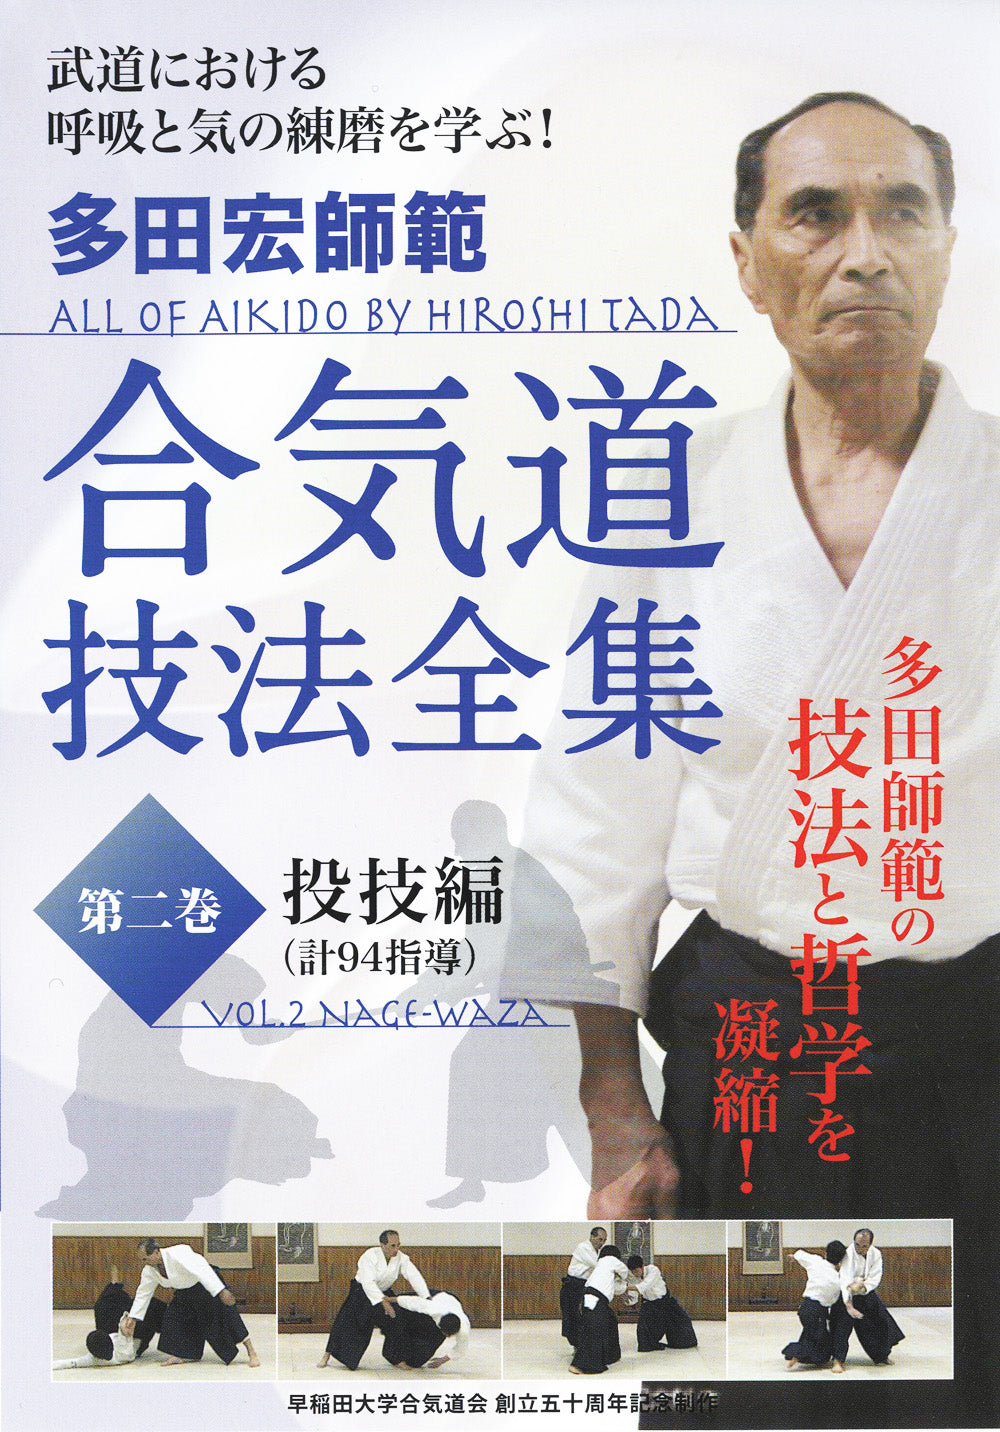 Todo el Aikido de Hiroshi Tada DVD 2: Nage Waza